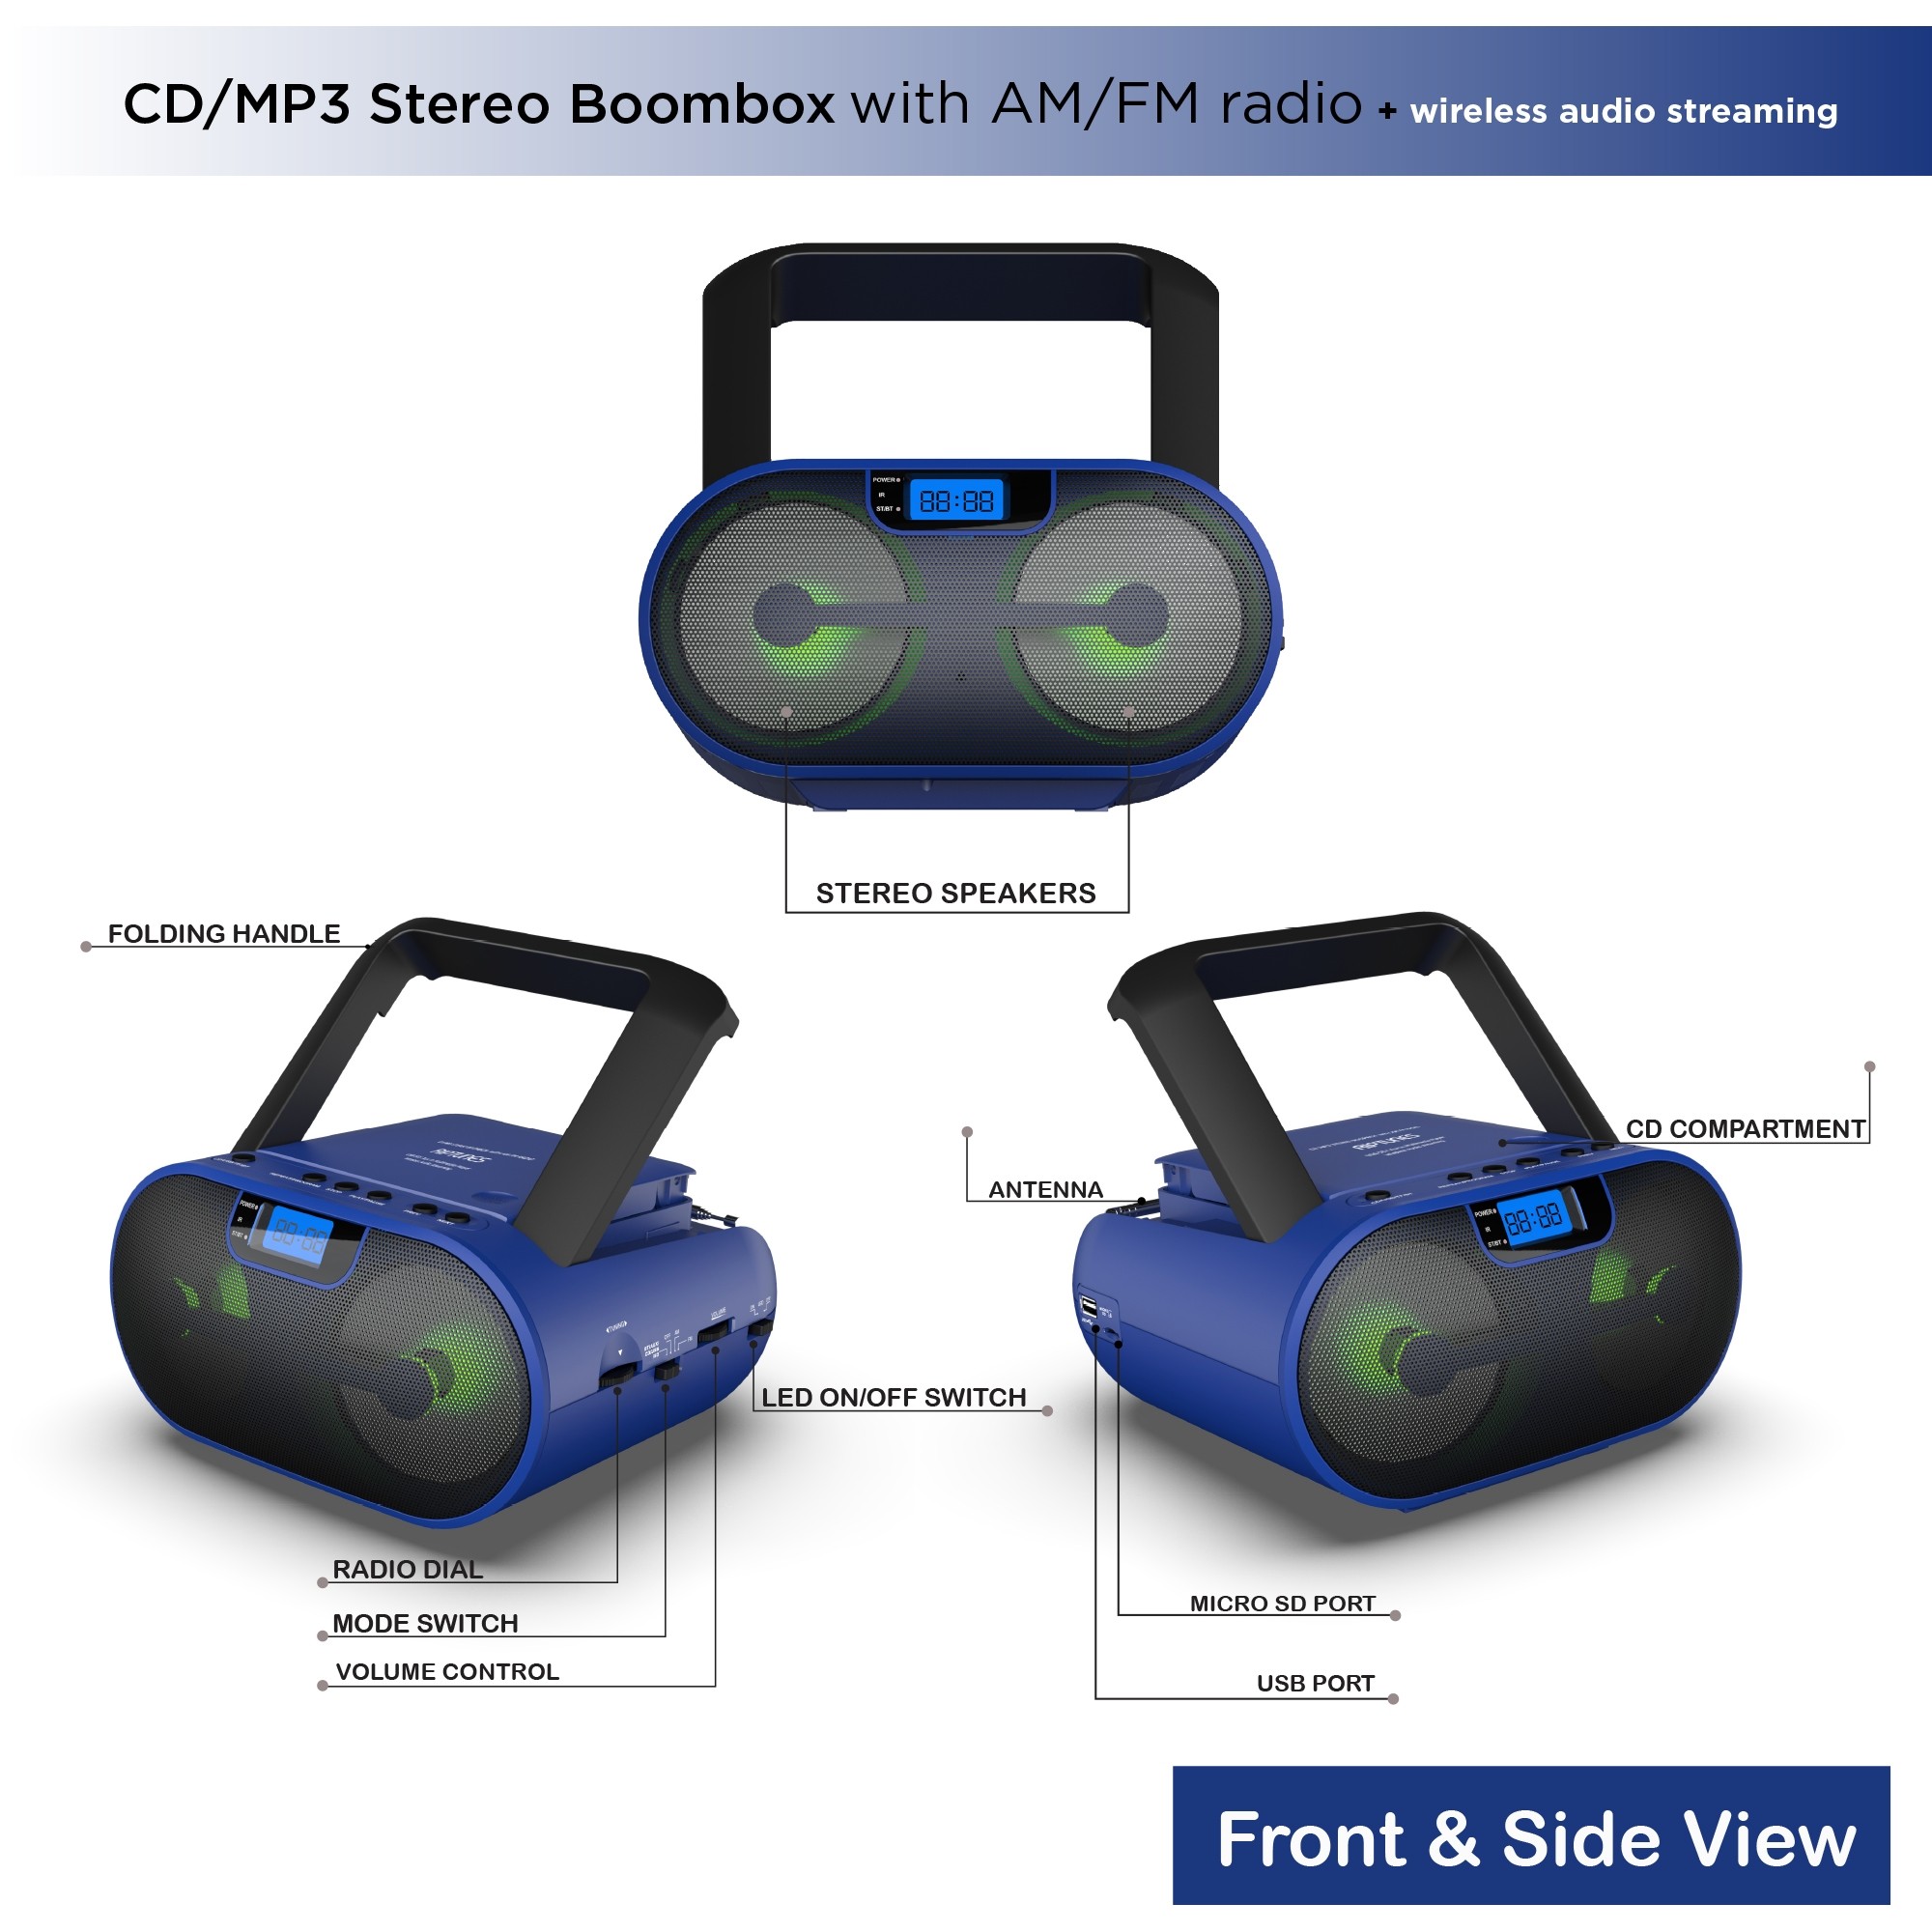 Radio CD Con Bluetooth Miray RMU-9253N